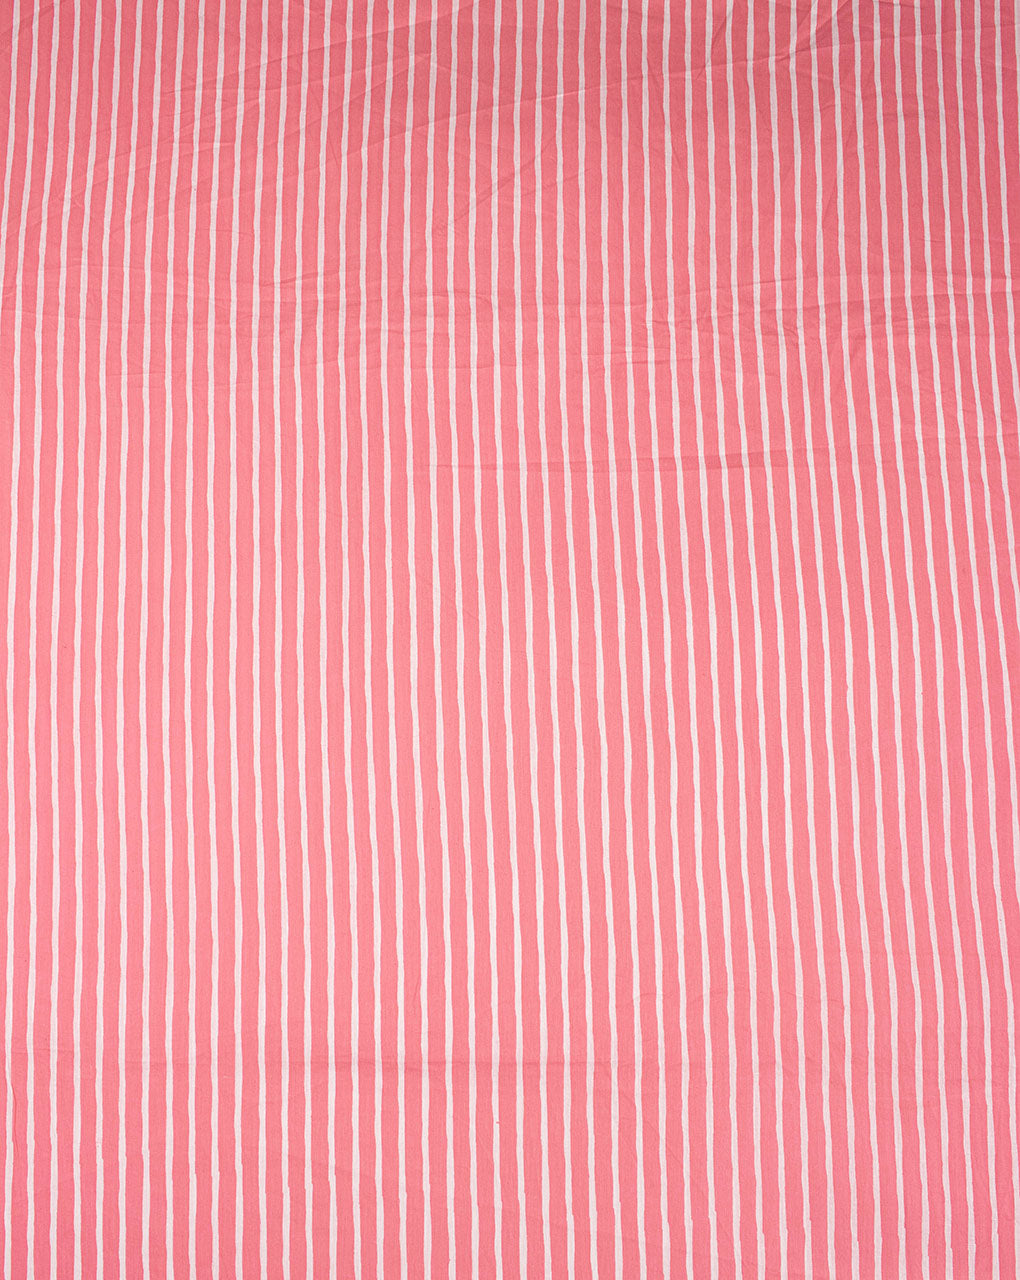 Discharge Screen Print Cotton Fabric - Fabriclore.com